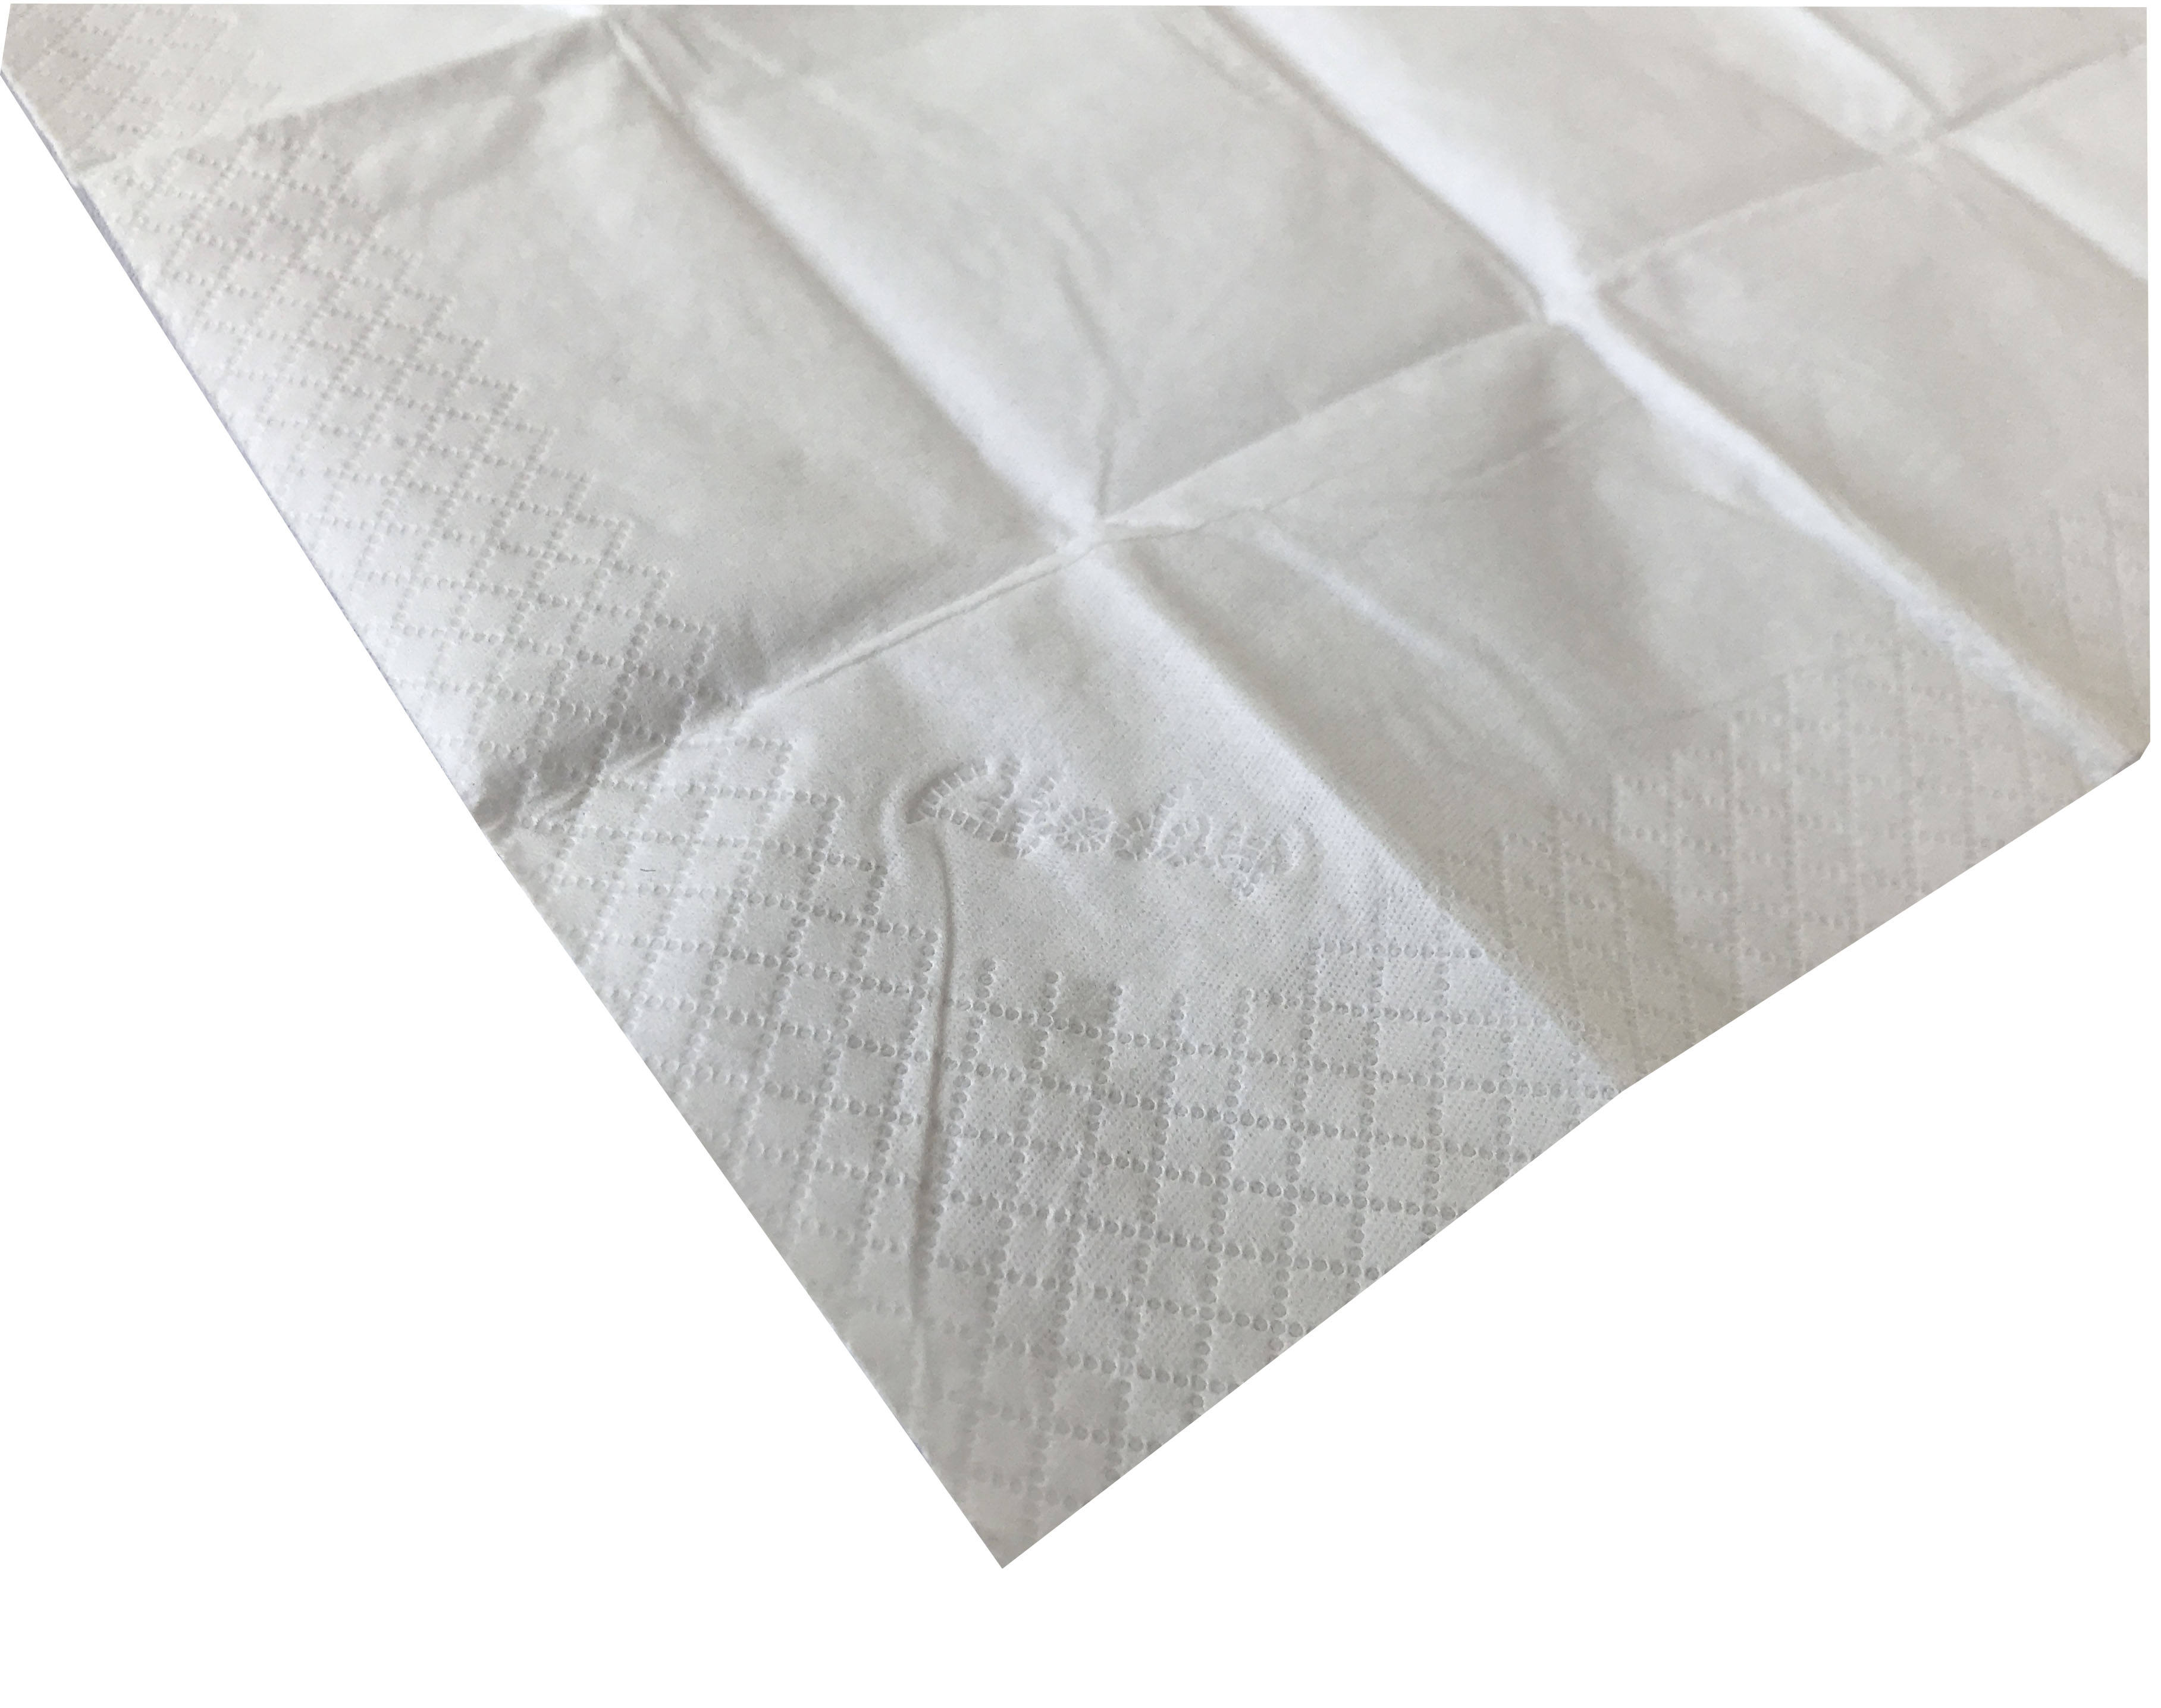 hot sale ultra Soft Standard 10 sheets Pocket Facial Tissue 100% virgin wood pulp economy pocket tissue in China 2020